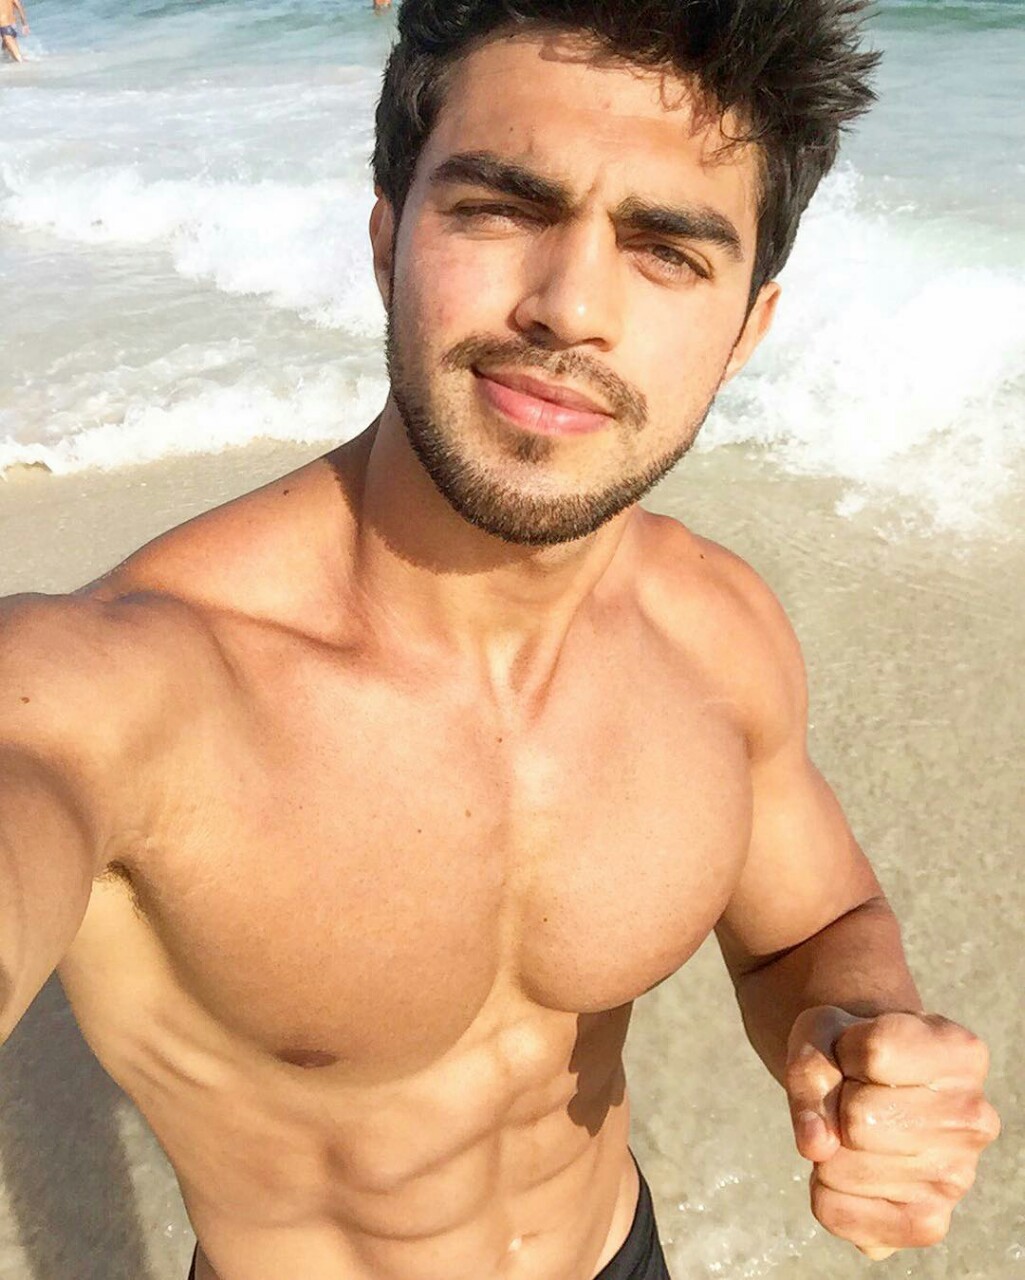 hot-shirtless-fit-guy-taking-selfie-abs-beach